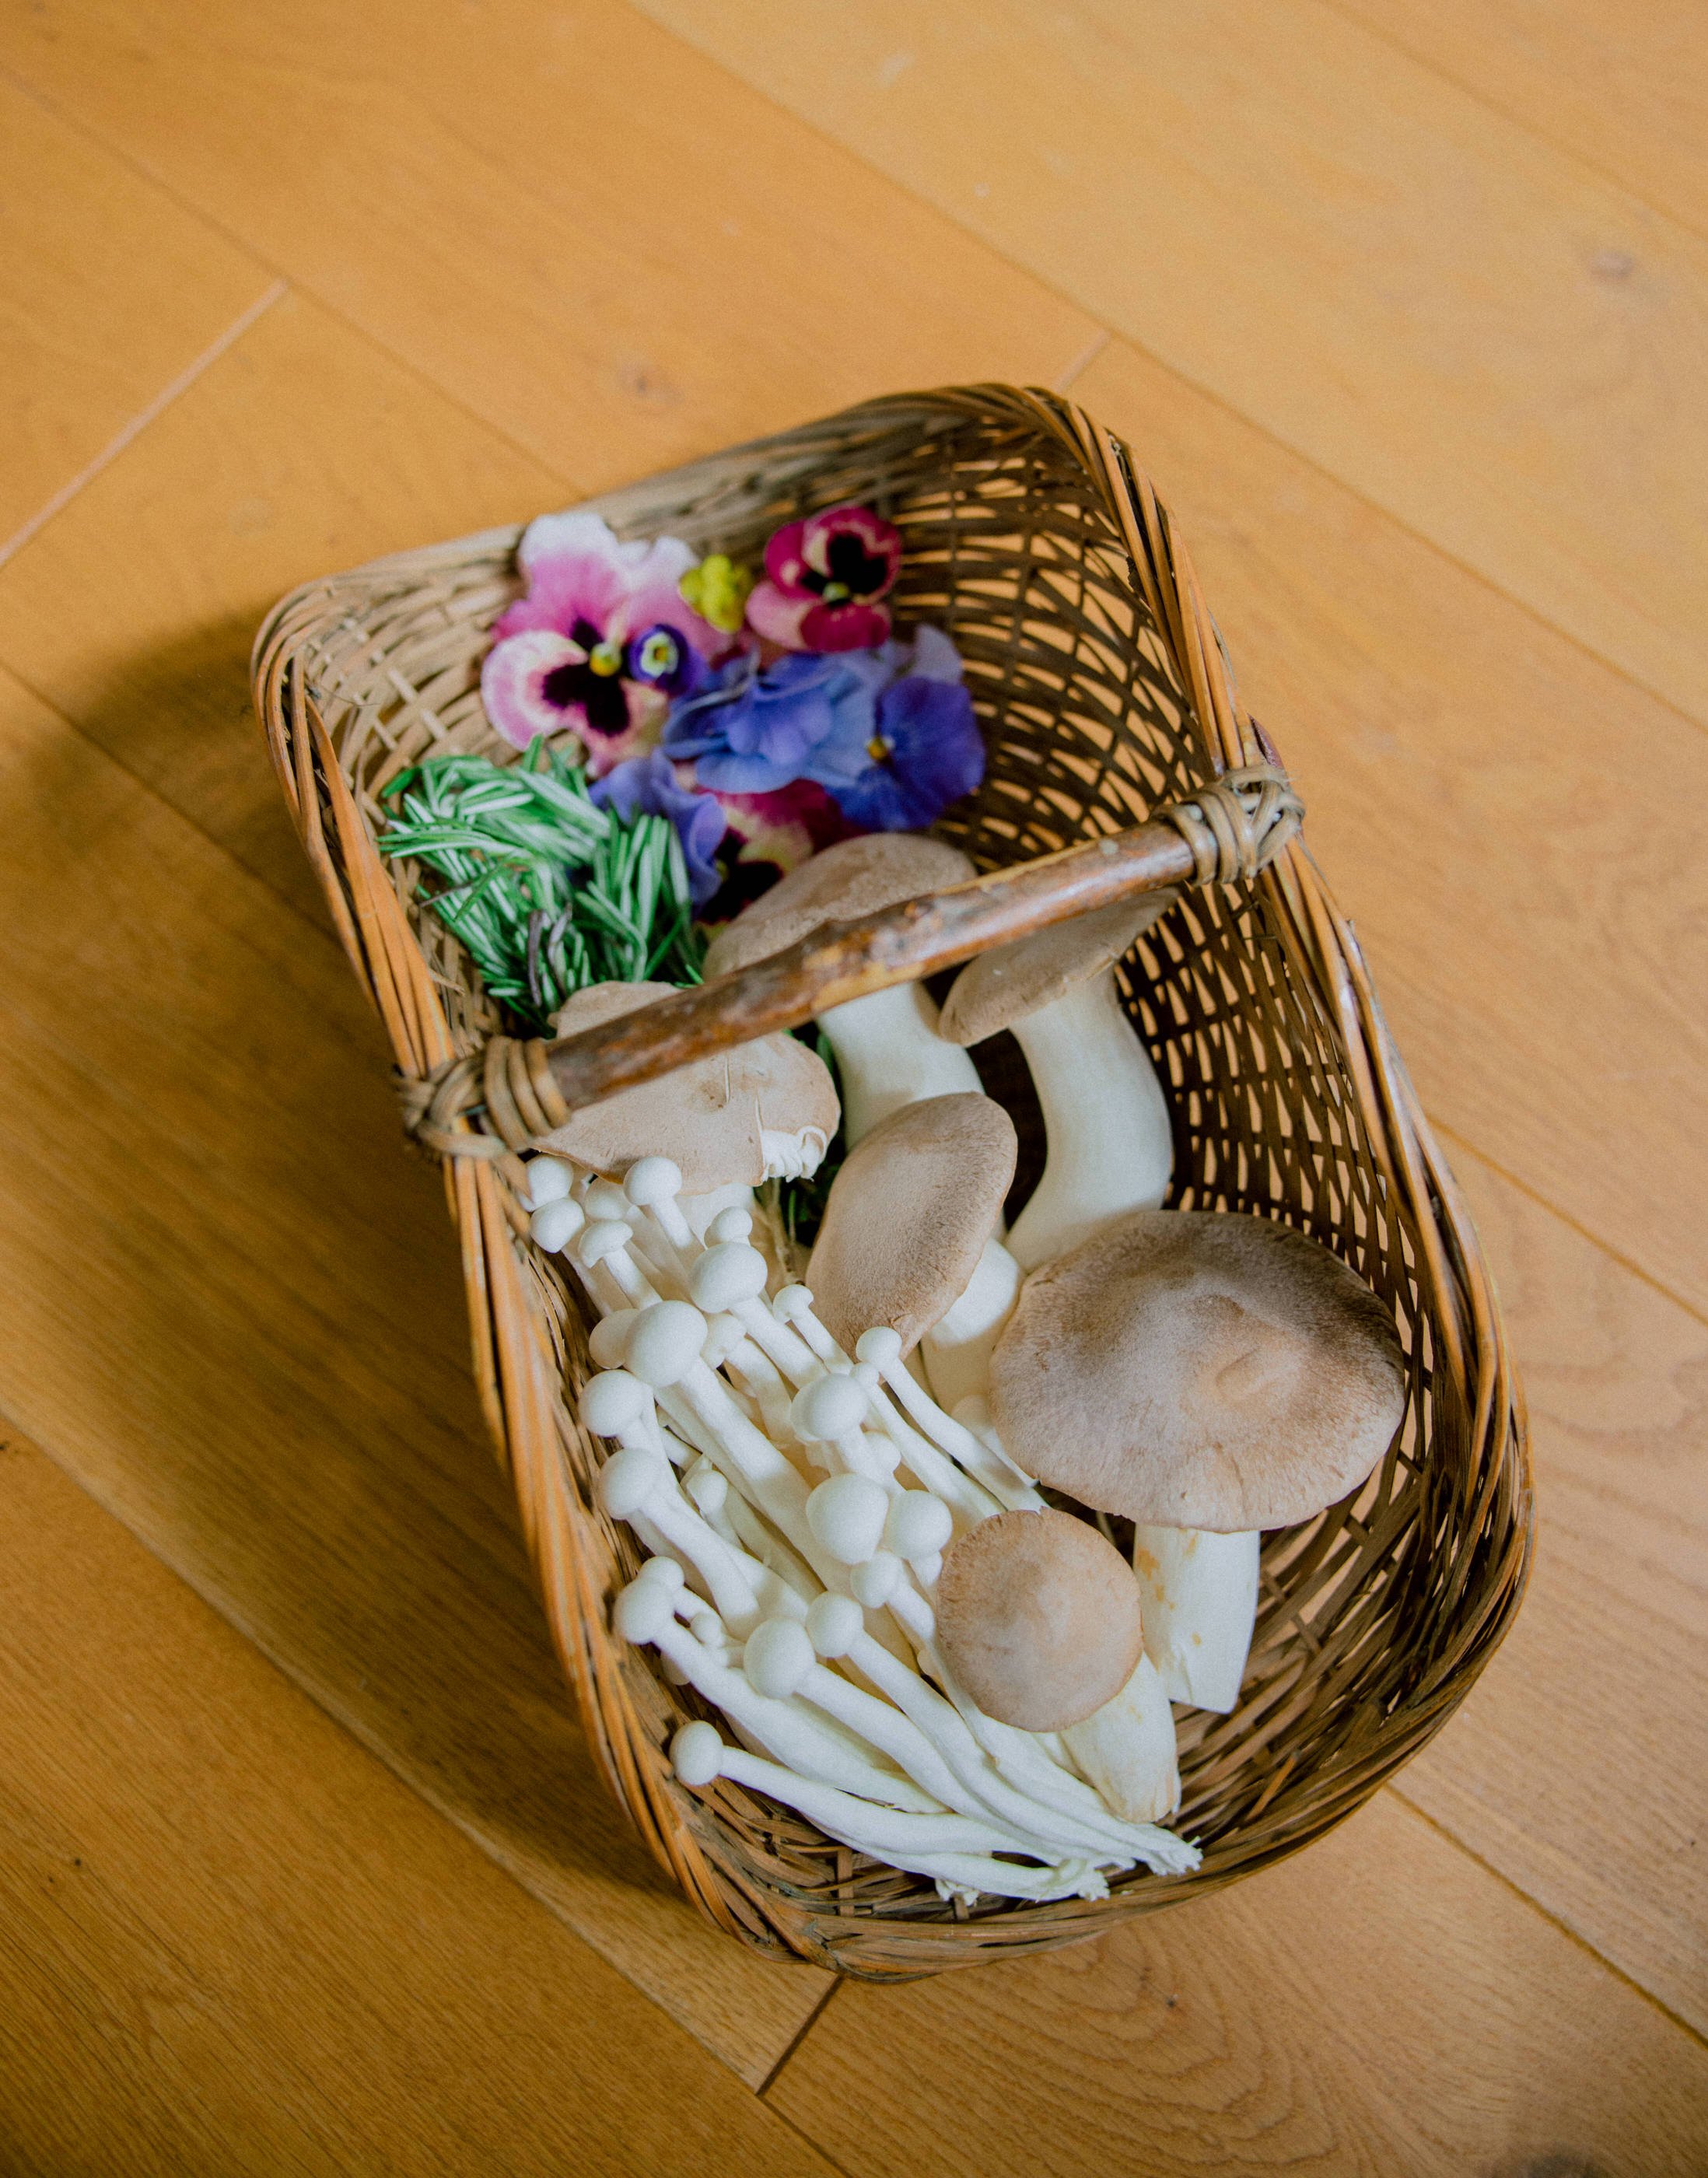 Mushroom Focaccia with Pansy Edible Flower - Her86m2 - 2.jpg